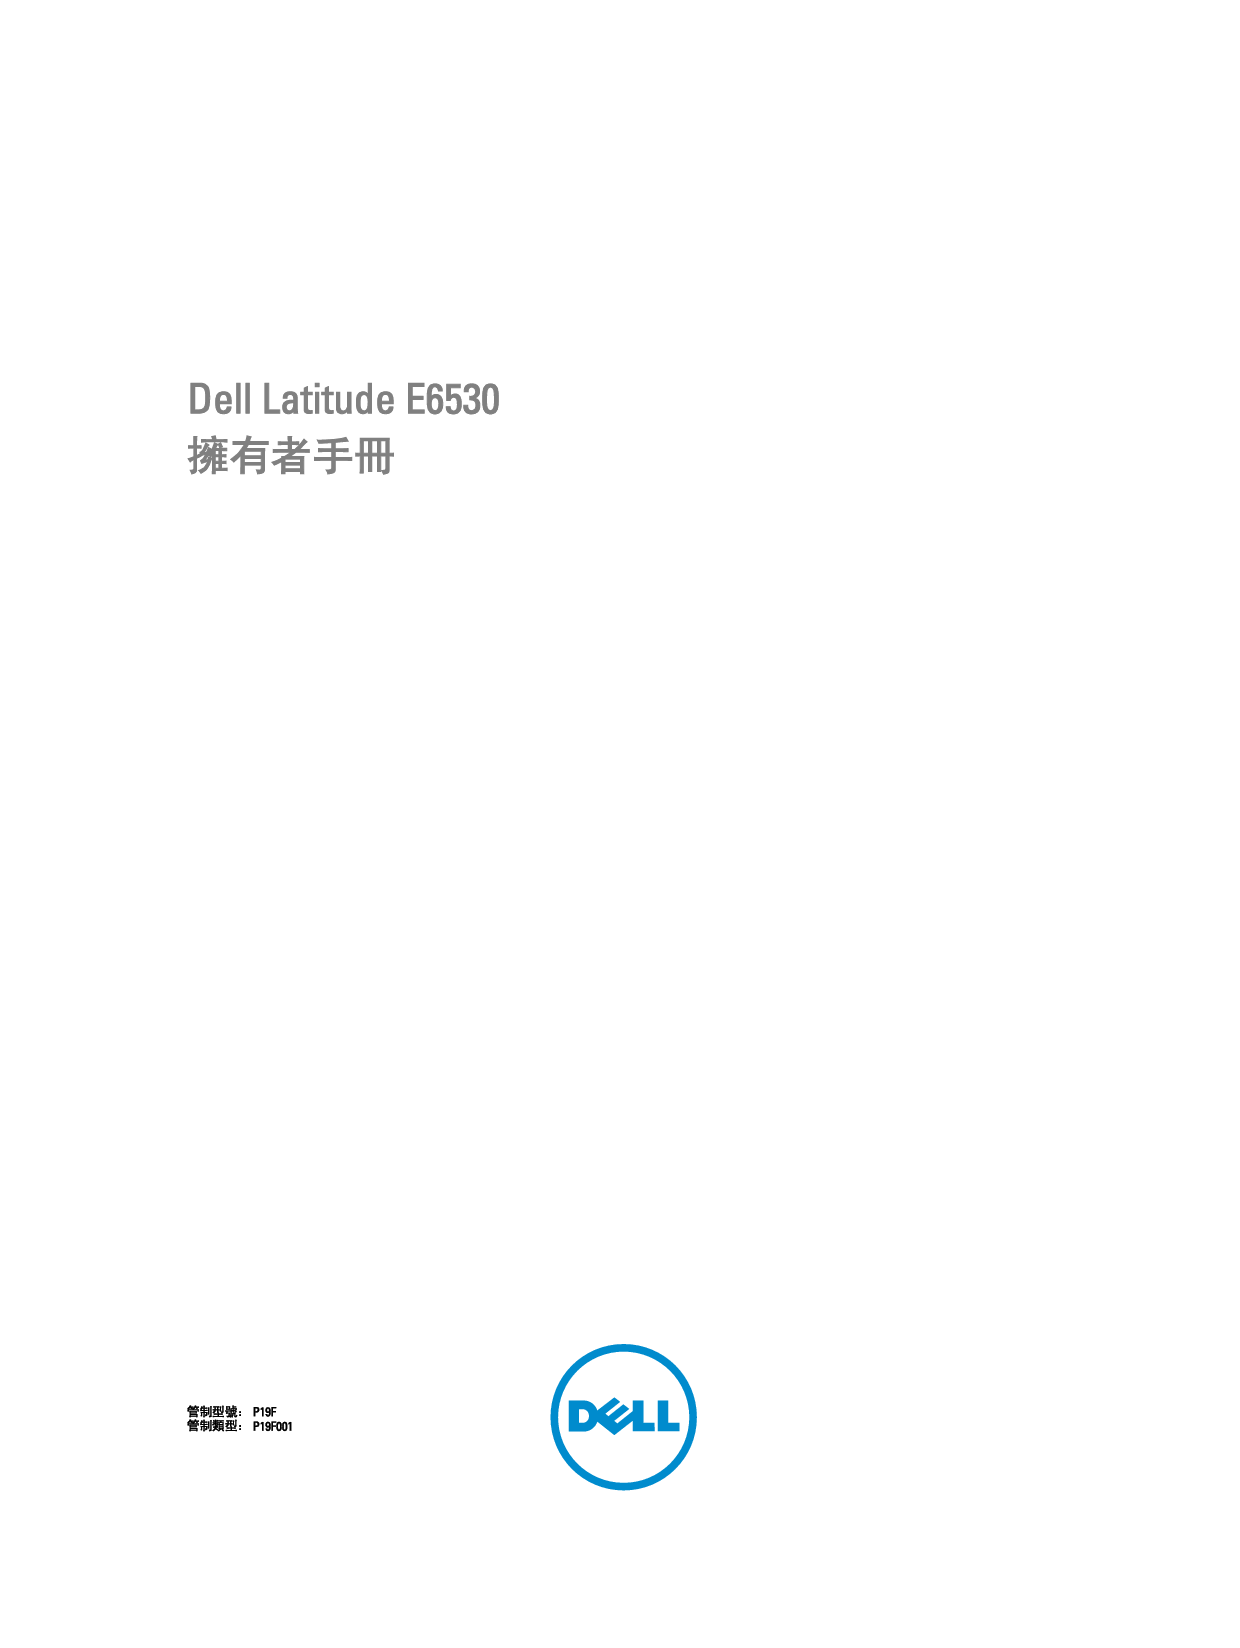 戴尔 Dell Latitude E6530 繁体 用户手册 封面